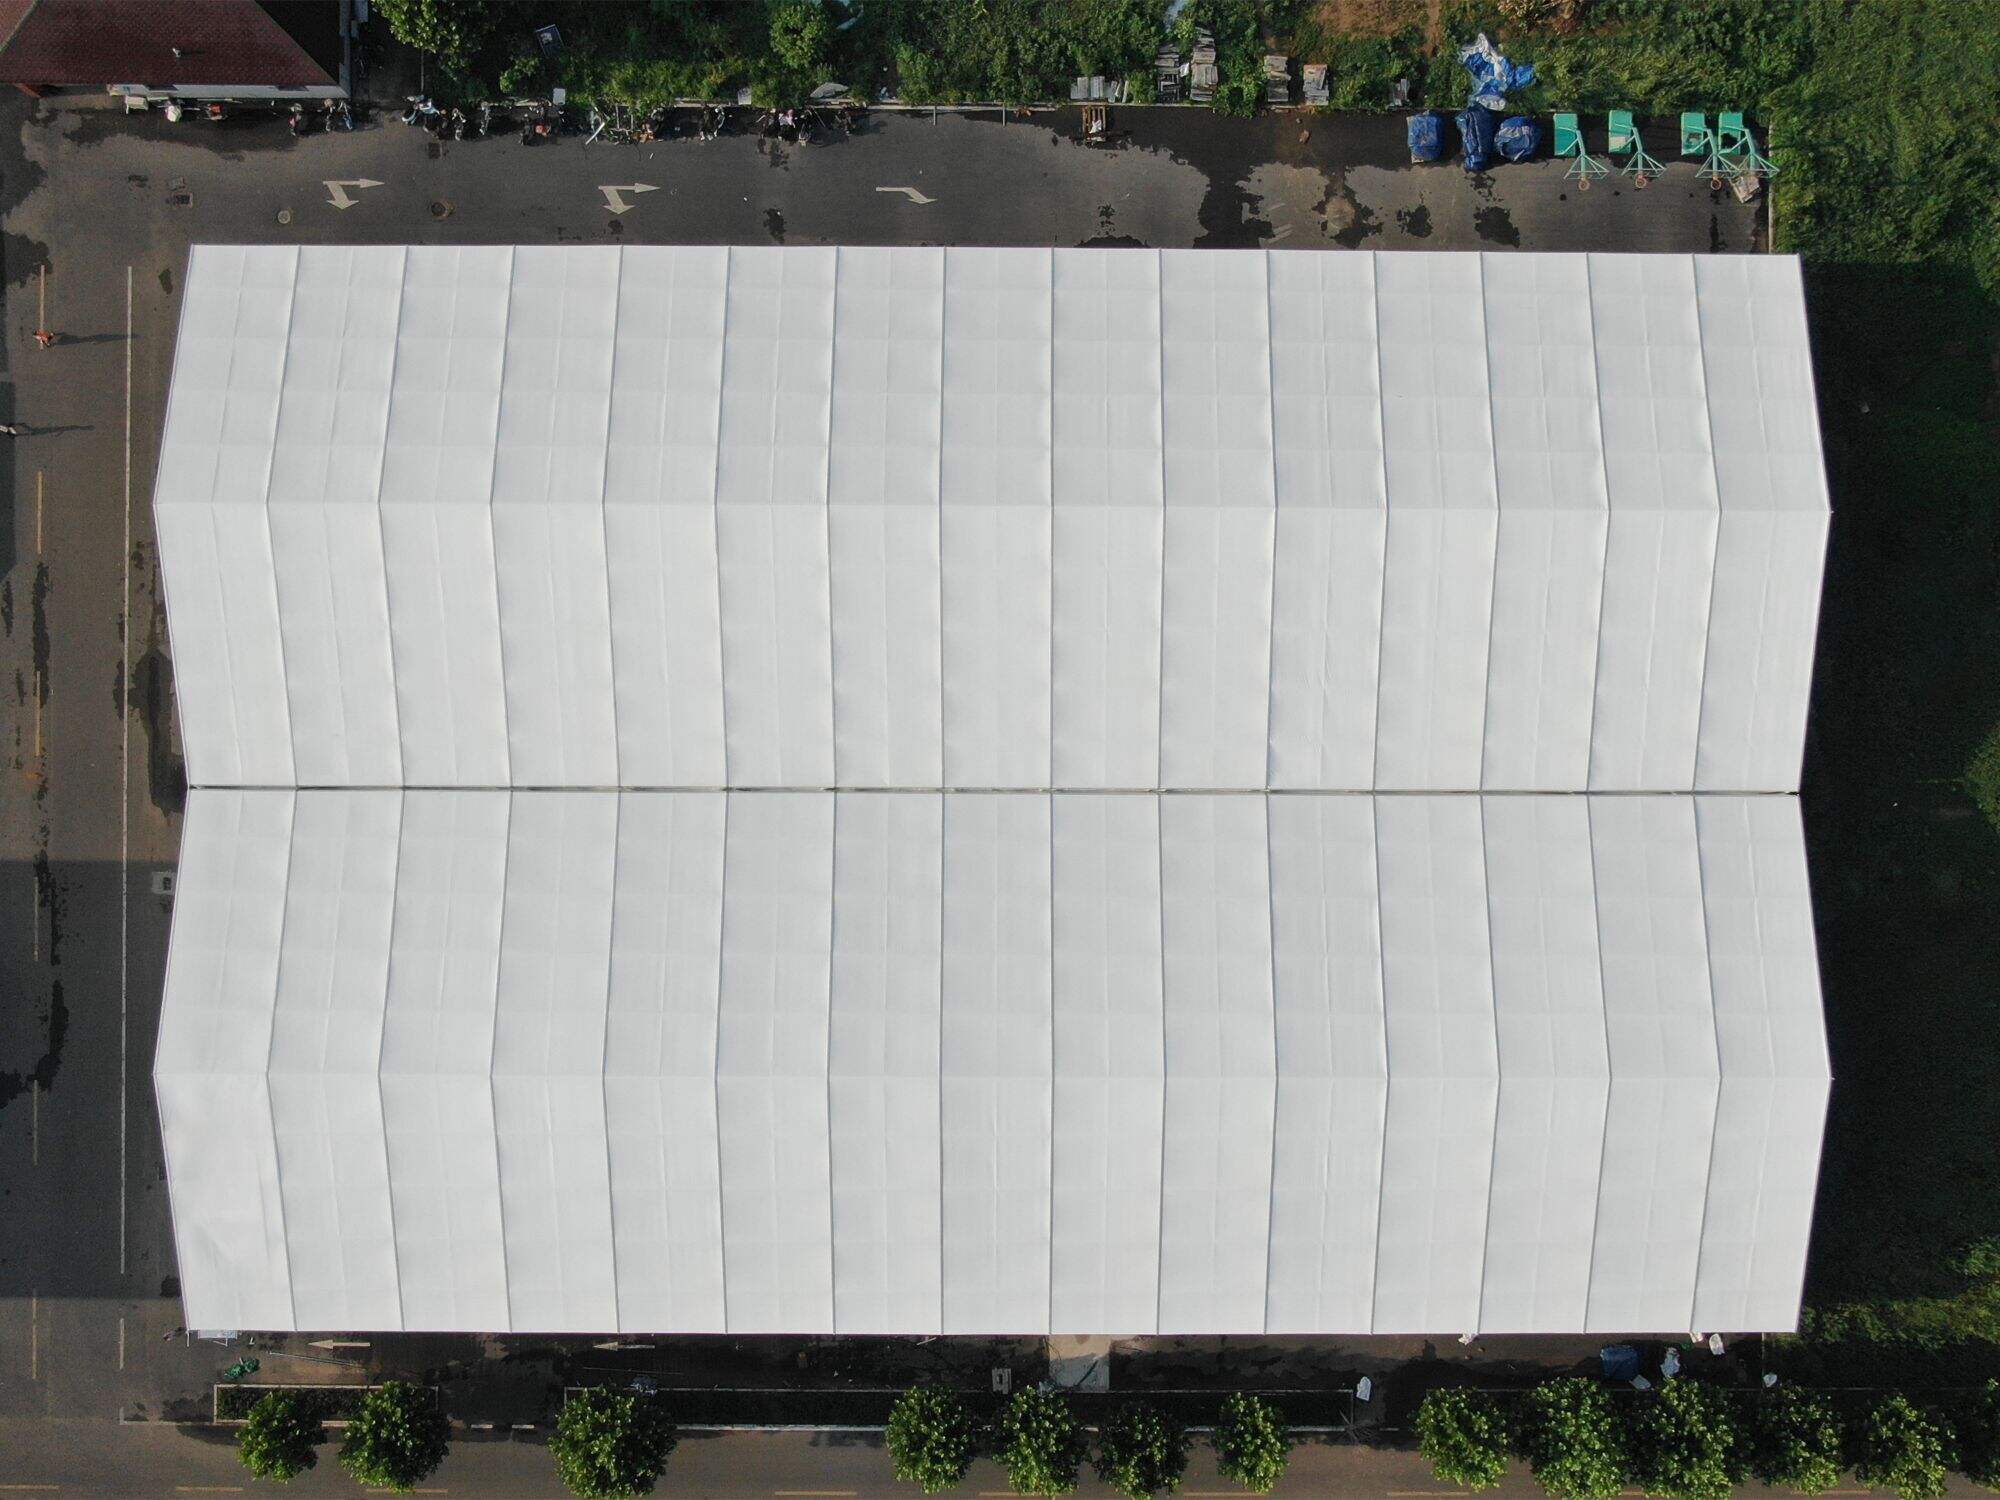 Warehouse Tents